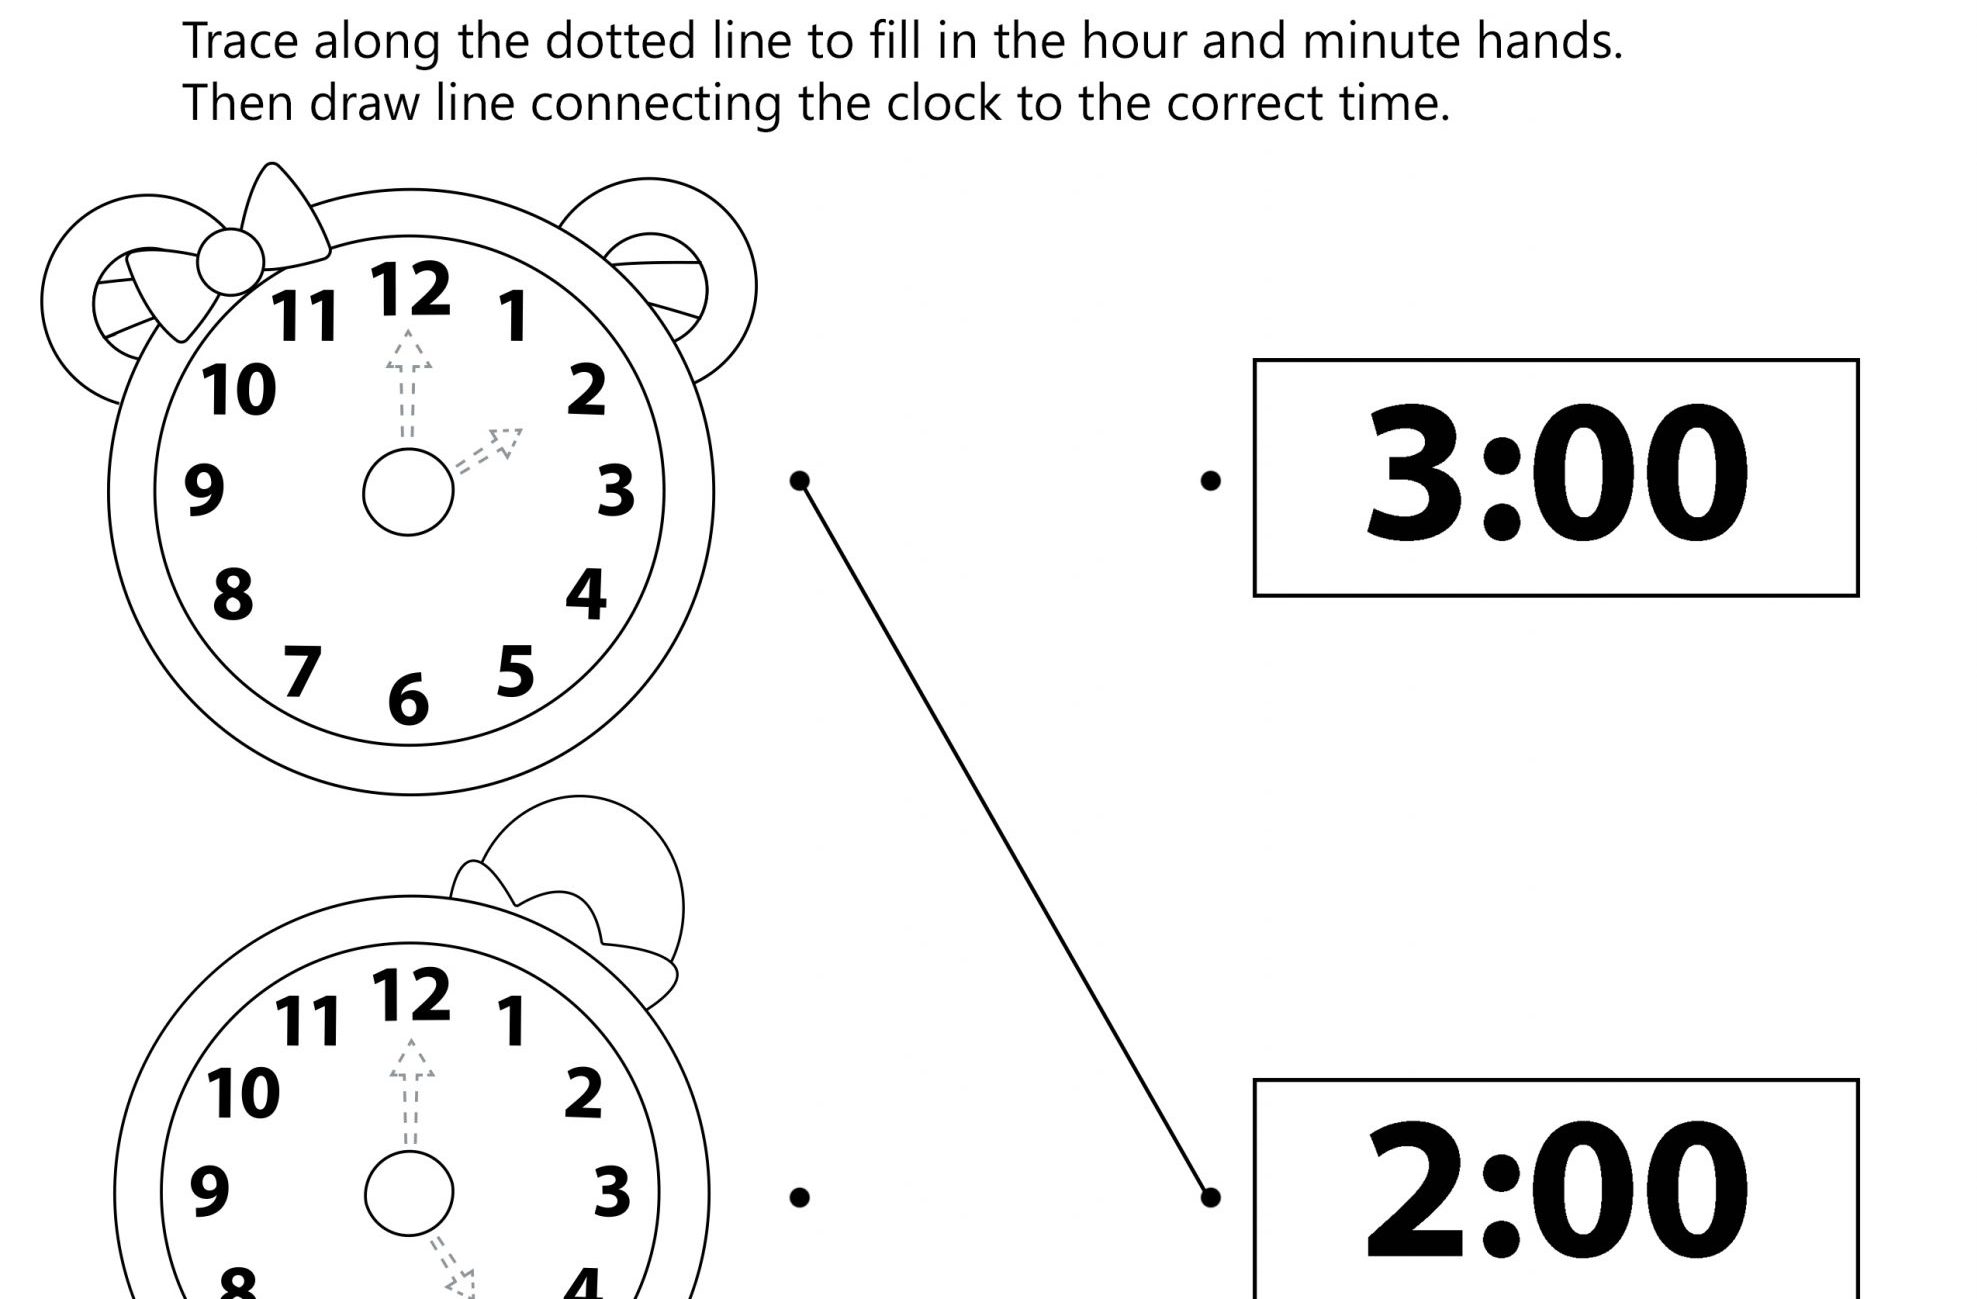 Hickory Dickory…Crash! Worksheet – Draw The Clock Hands